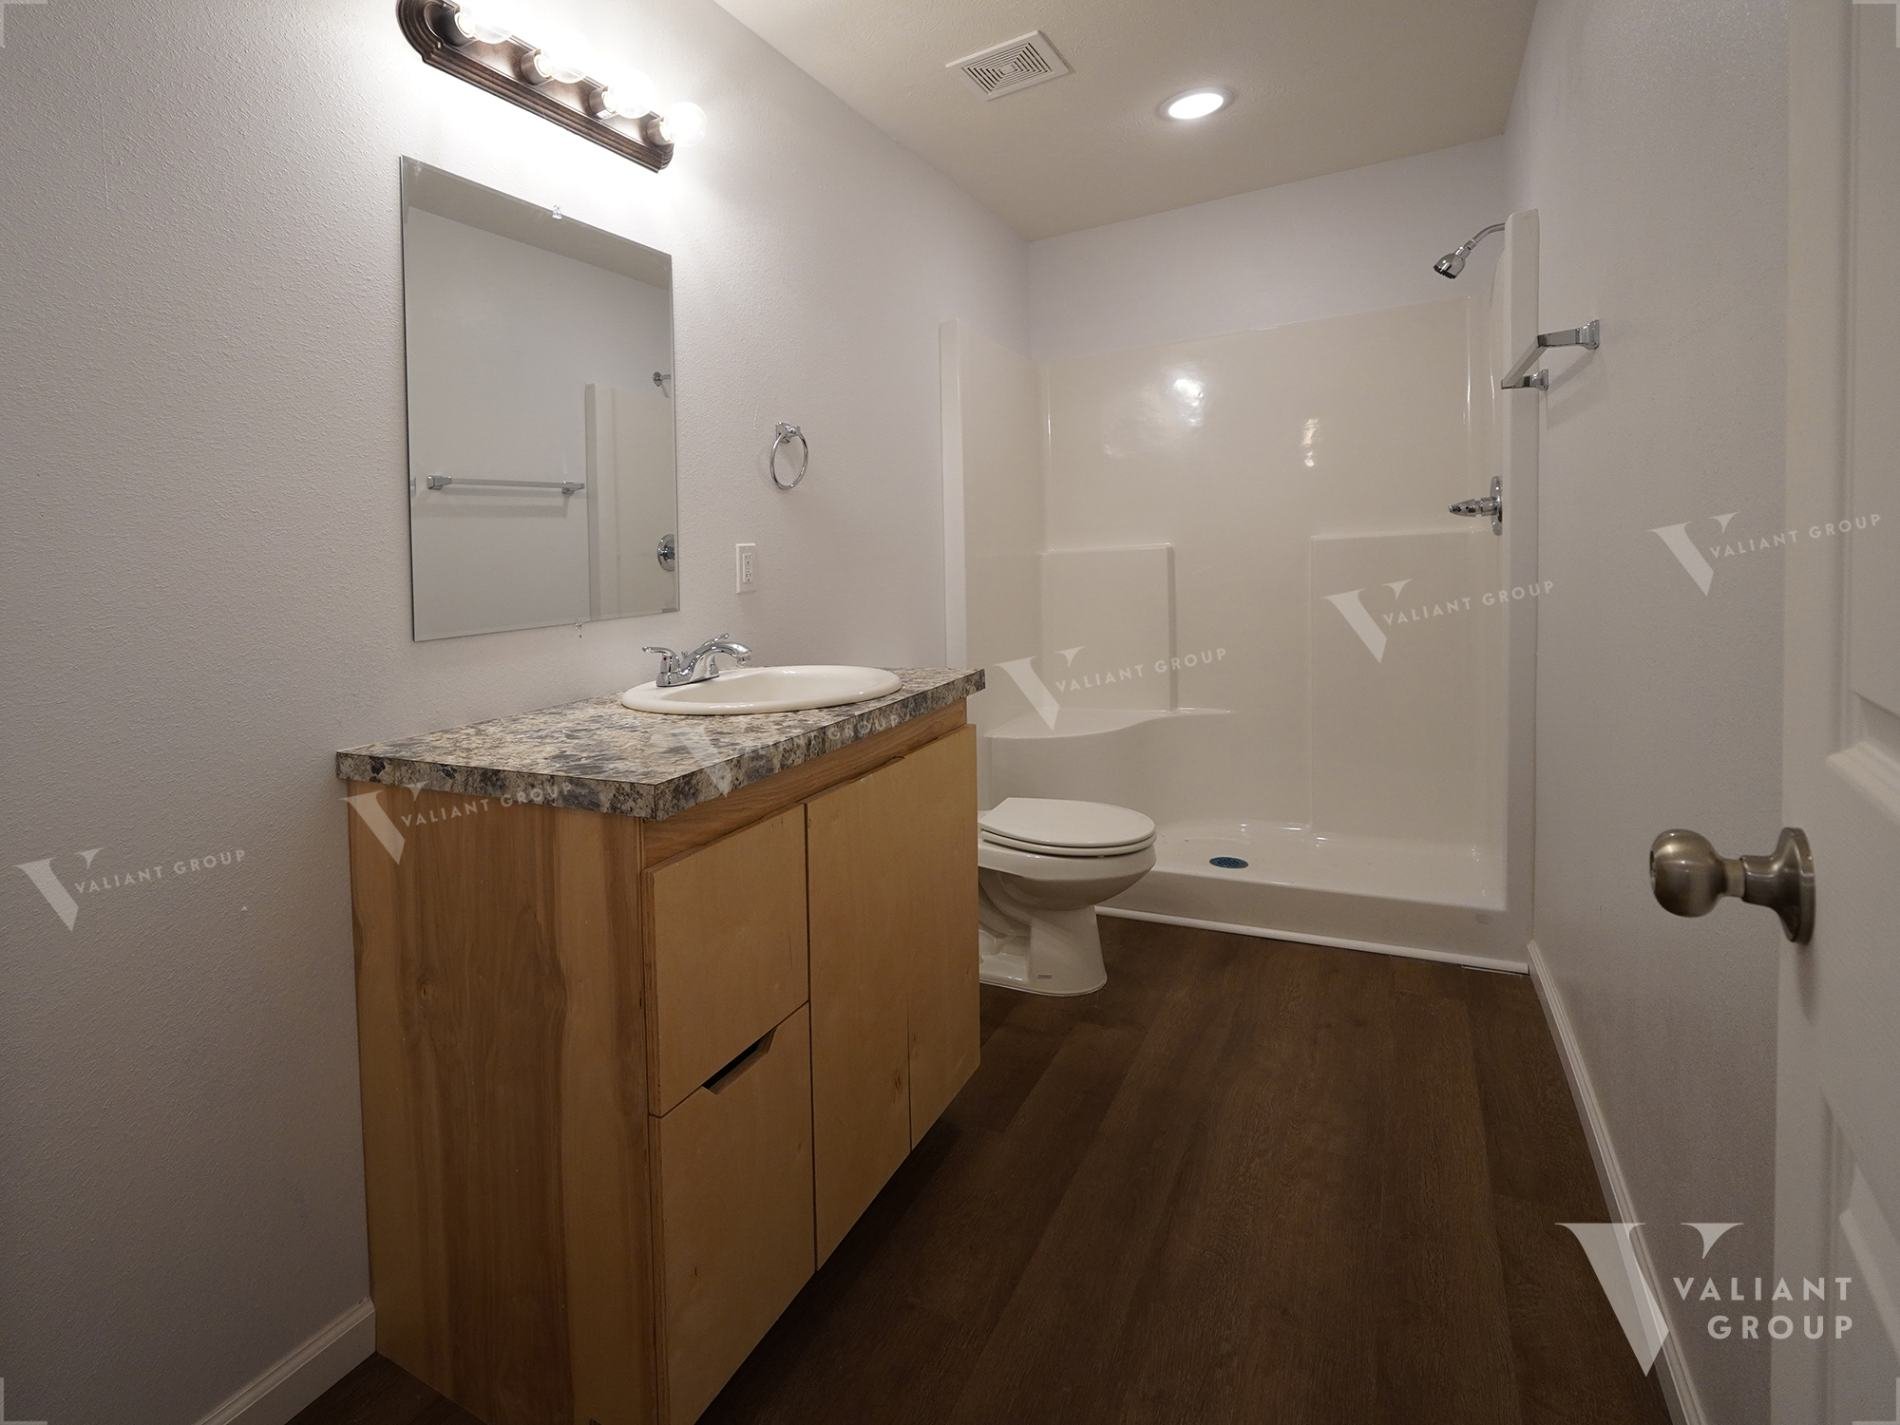 Rental-Apartment-2420-E-Blaine-Springfield-Mo-Apt-10-05-Bathroom.jpg